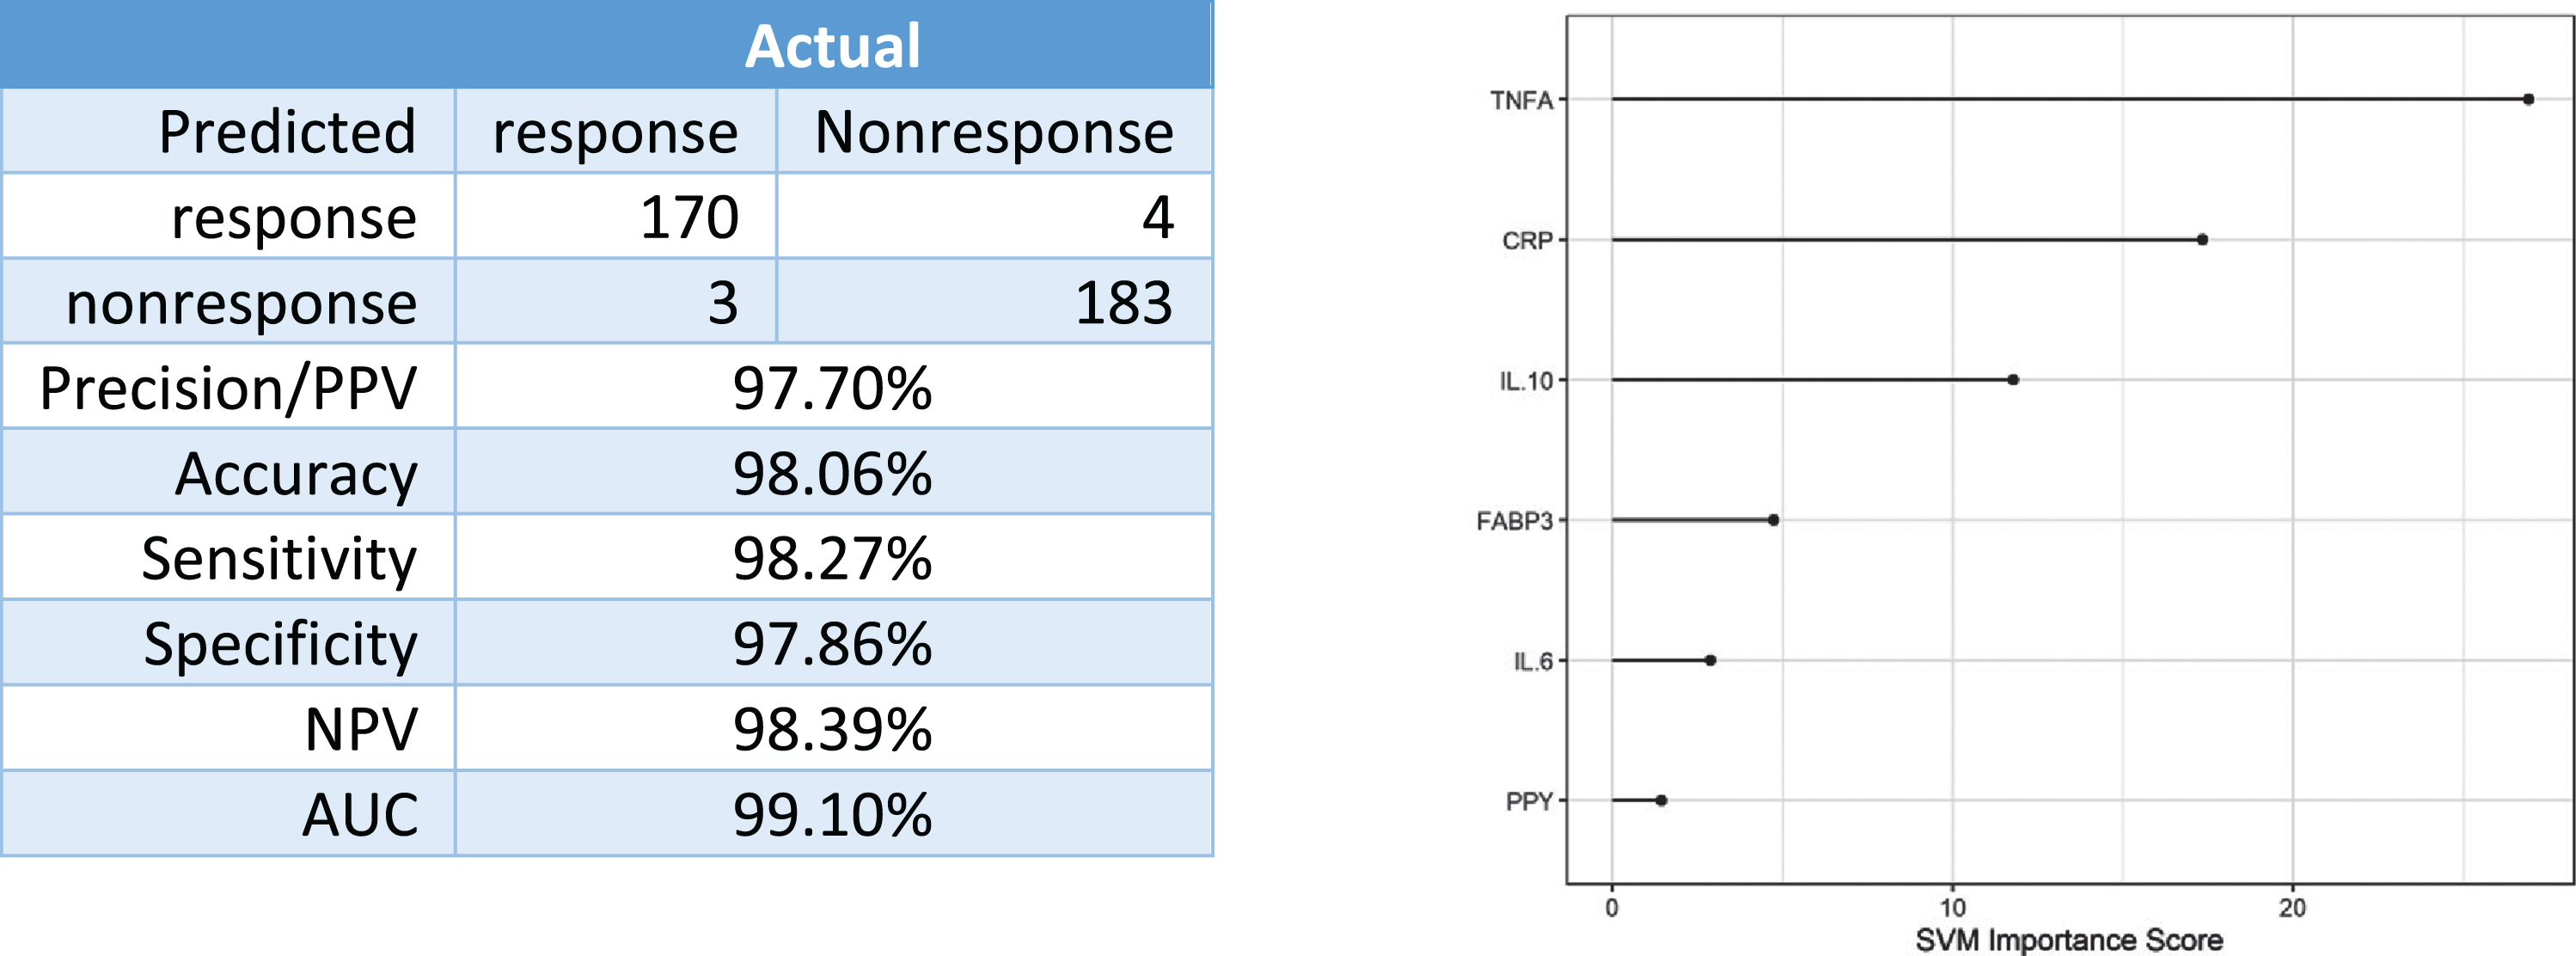 Predictive accuracy in identifying responders versus non-responders dosages.